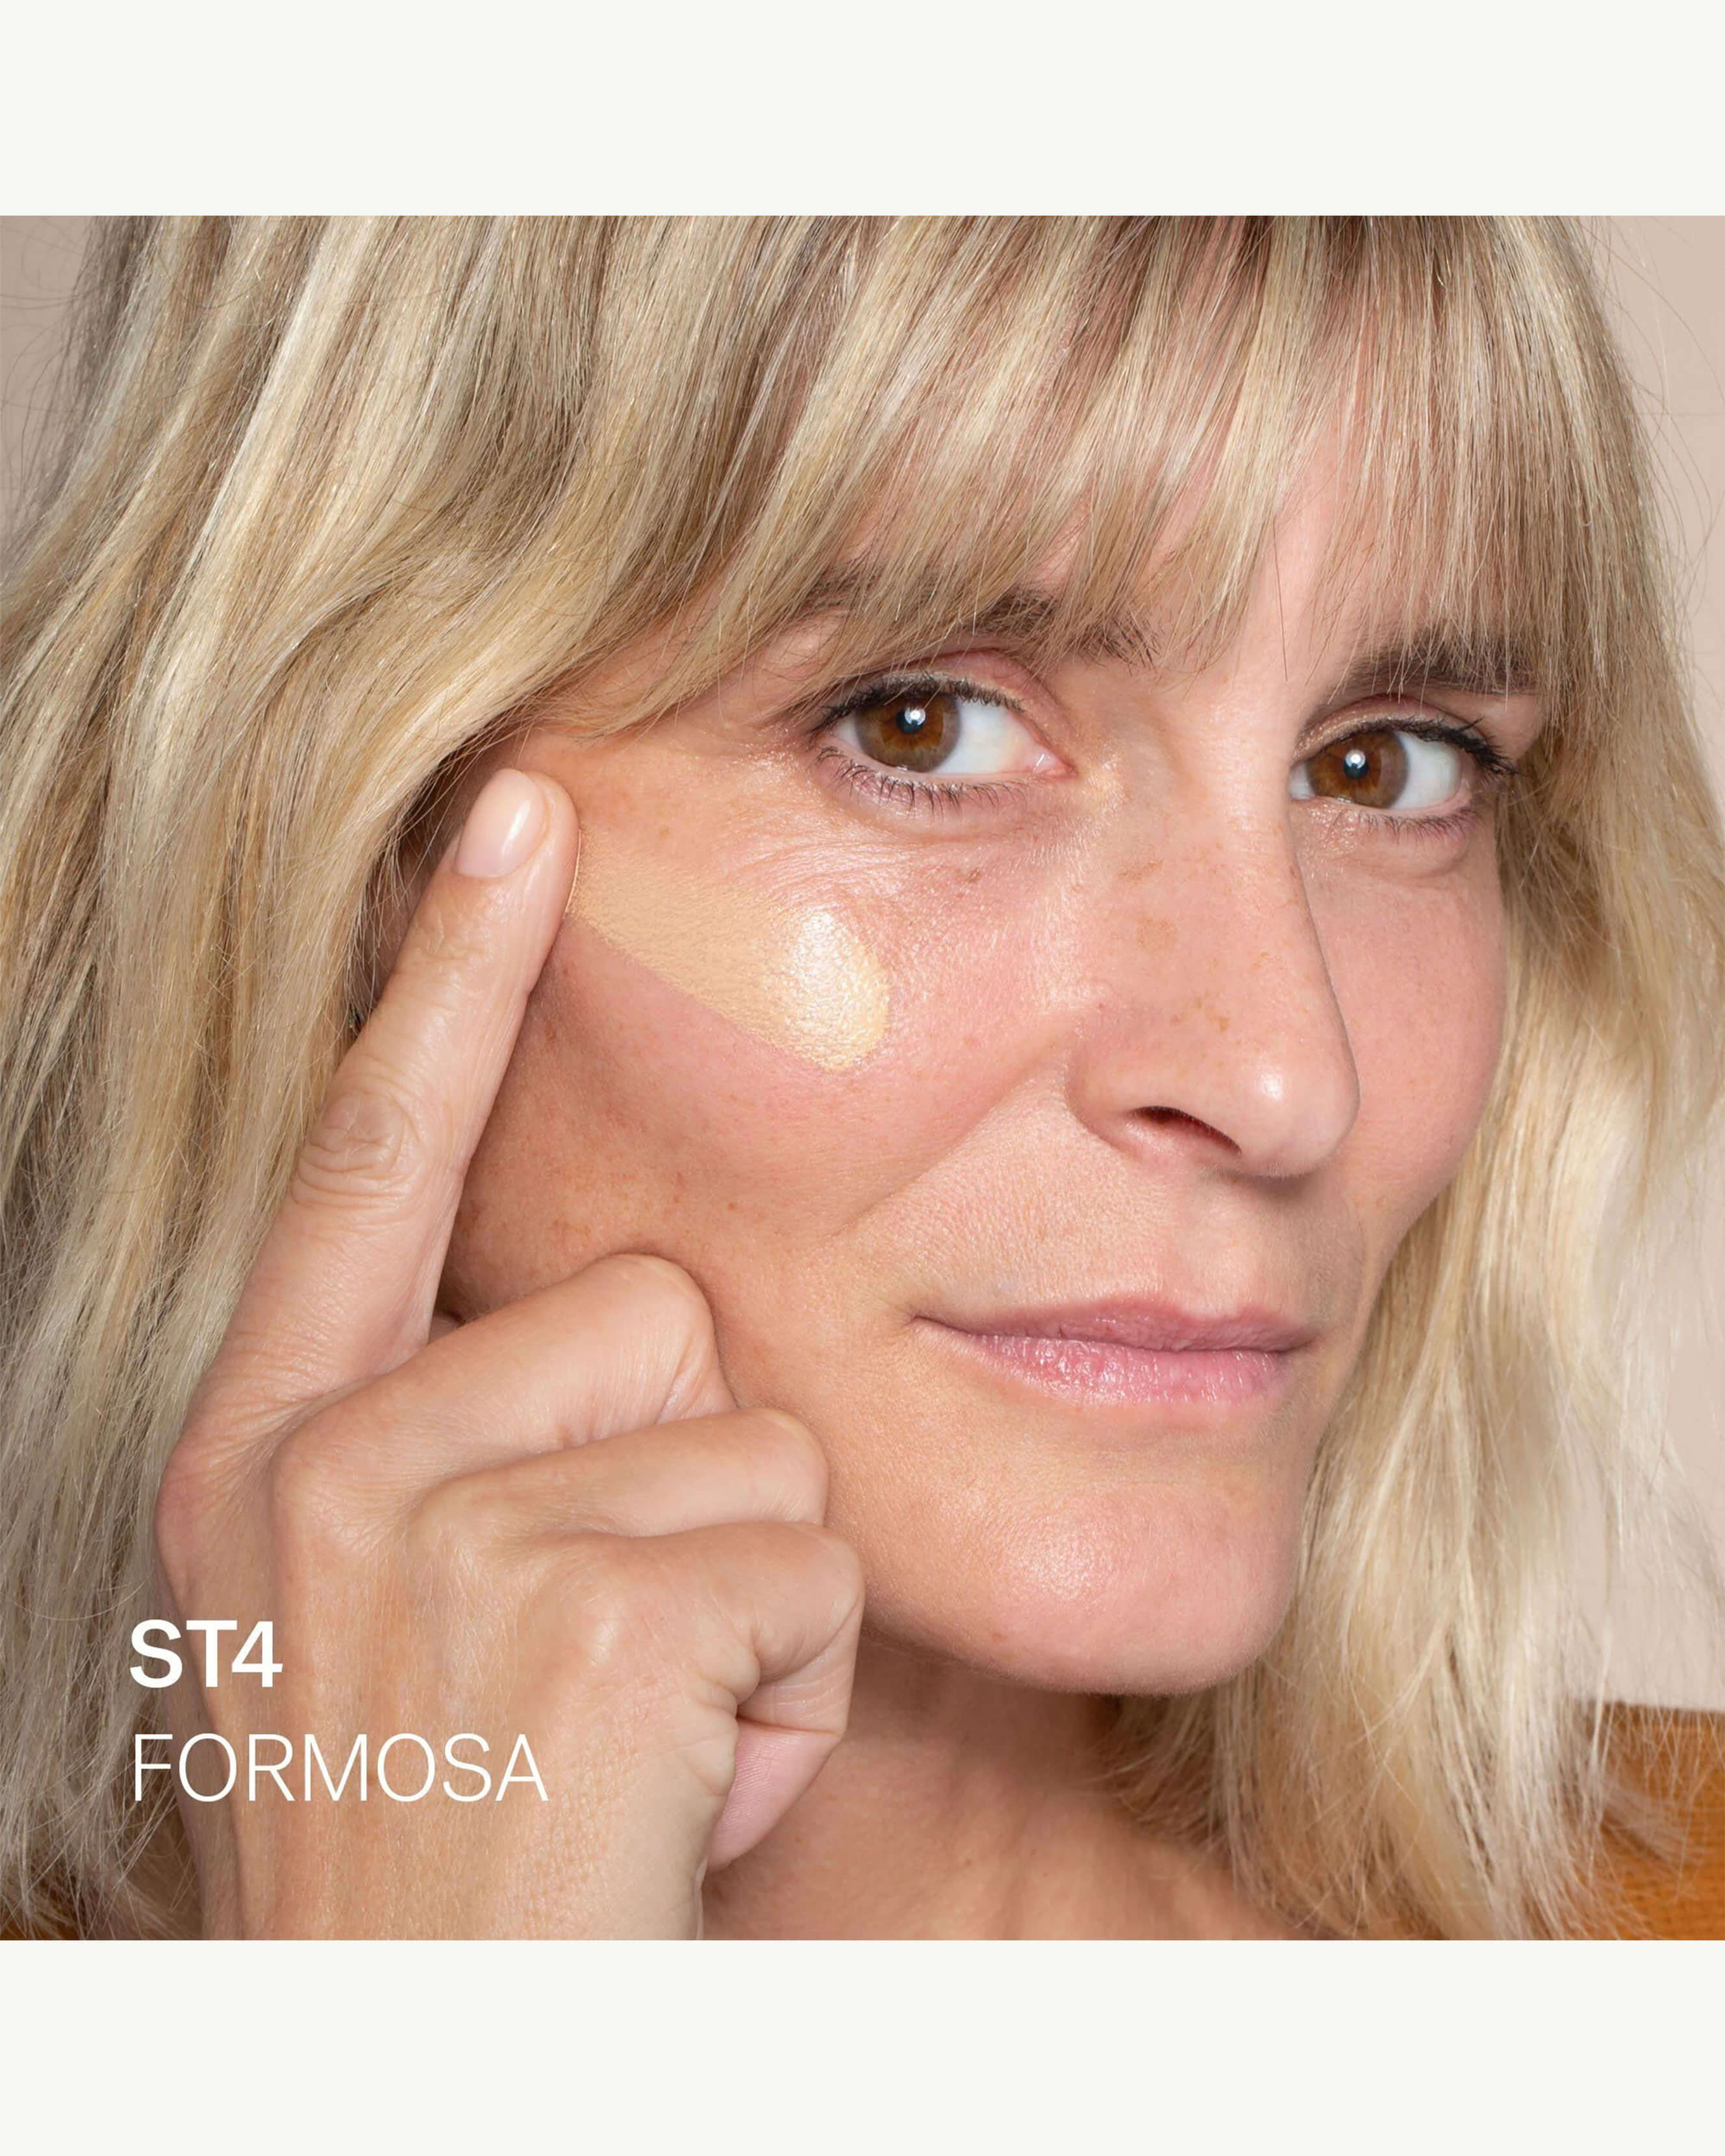 ST4 Formosa (for fair skin with neutral warm undertones)